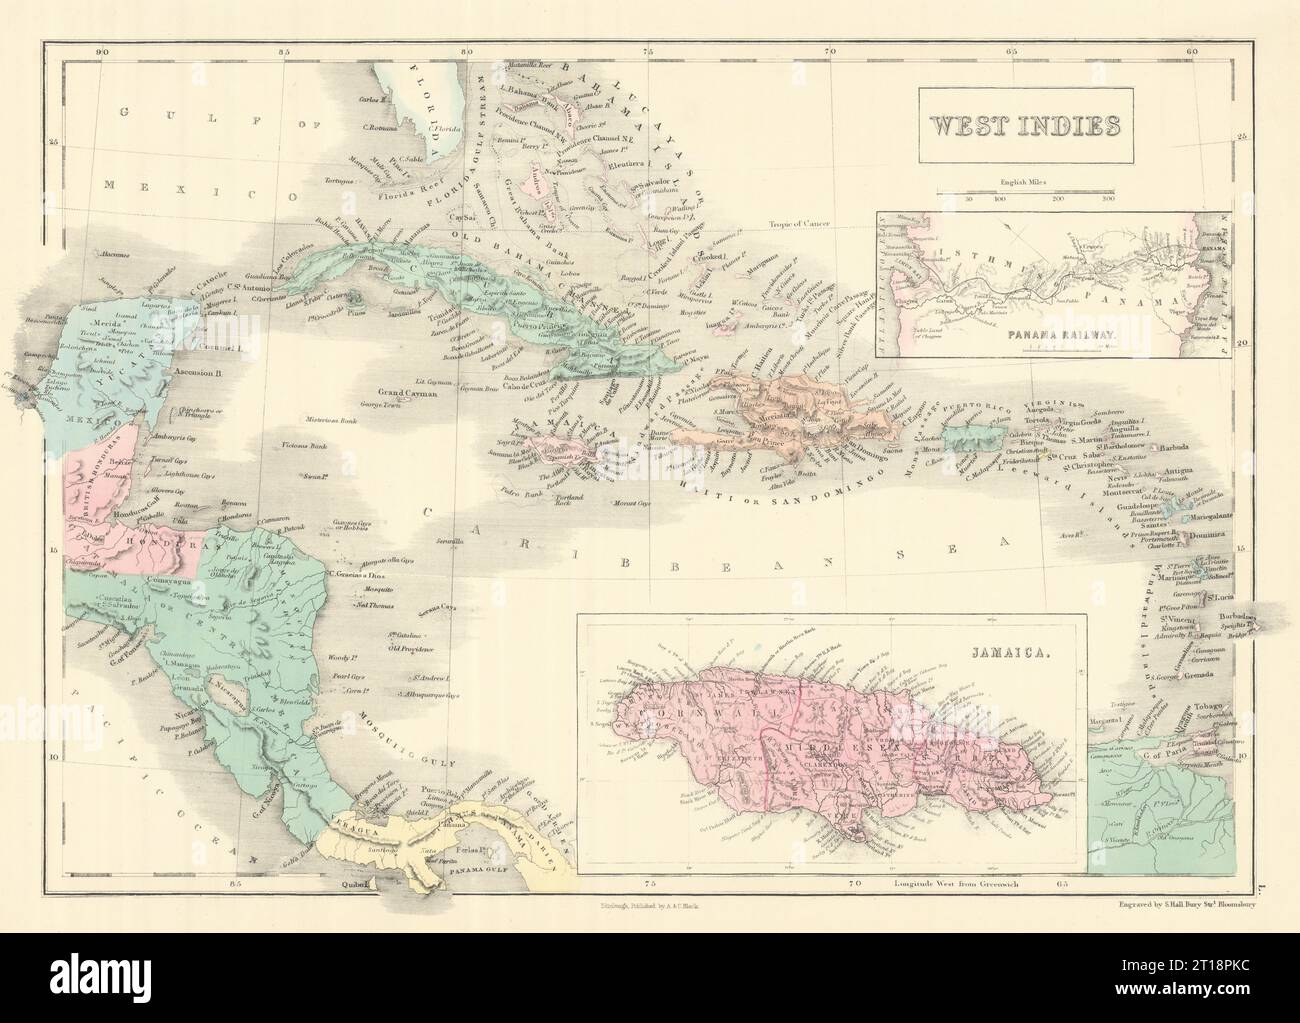 Westindien. Inset Panama Railway & Jamaika. Karibik. SIDNEY HALL 1854 Karte Stockfoto